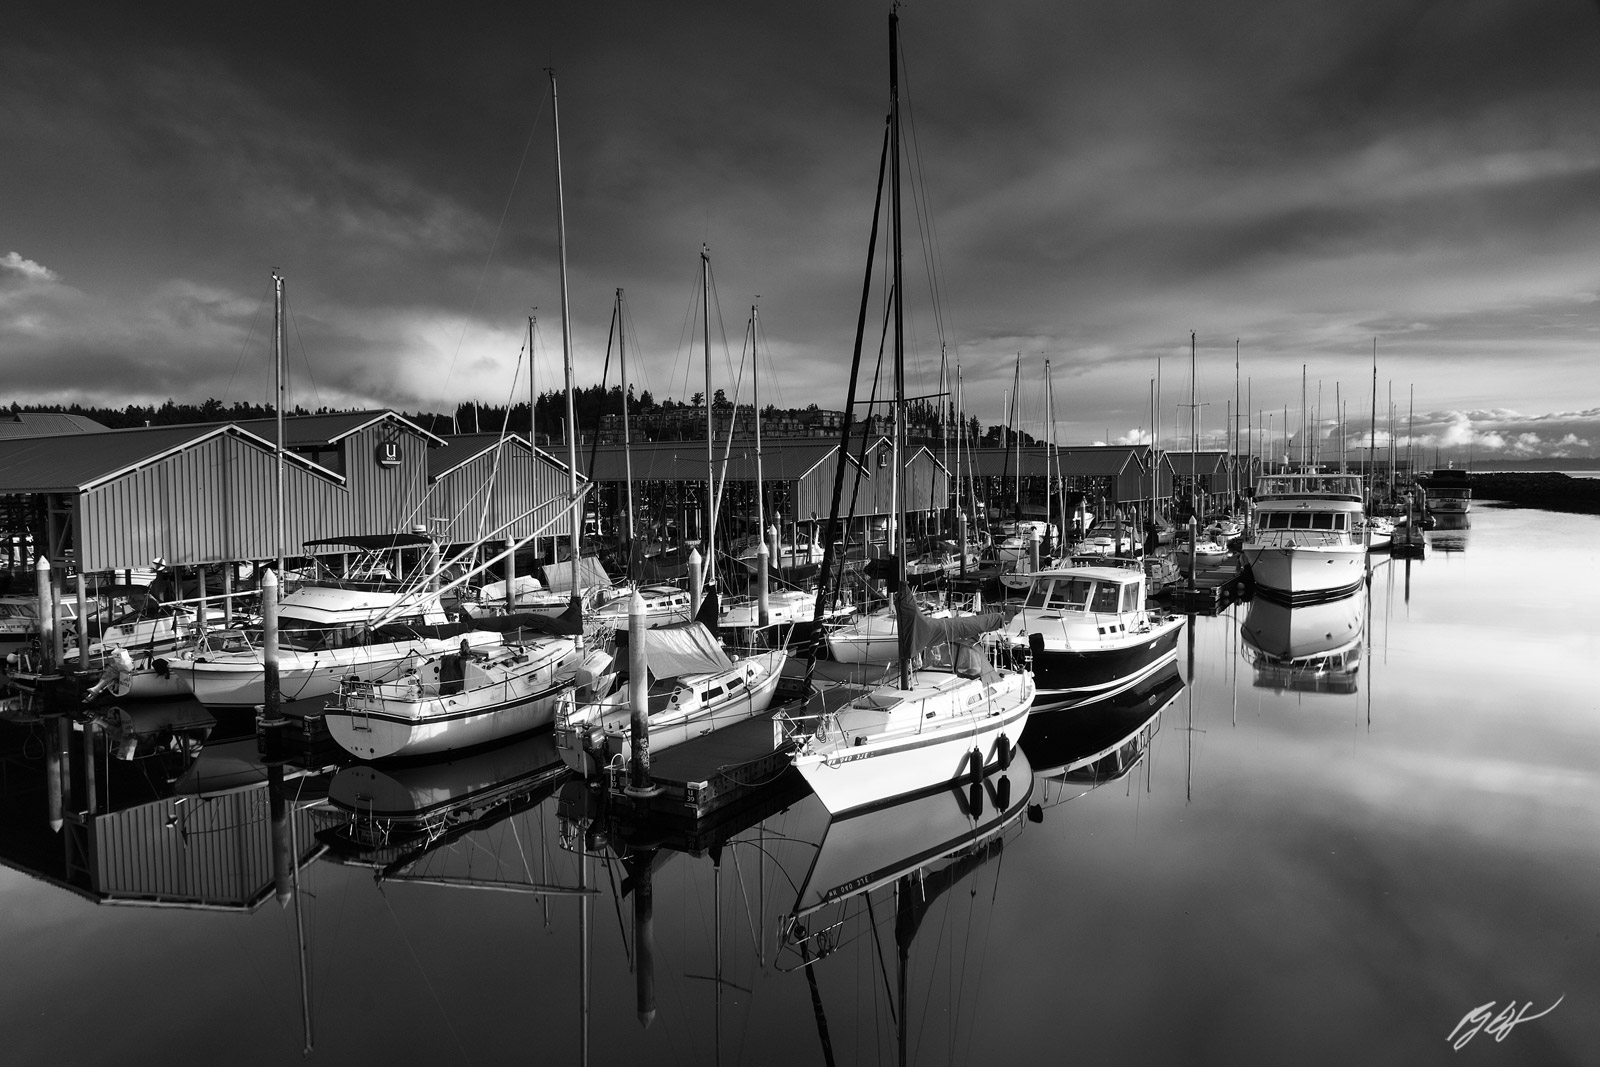 Boat reflection in Edmonds Marina from Edmonds Fishing Pier in Edmonds Washington